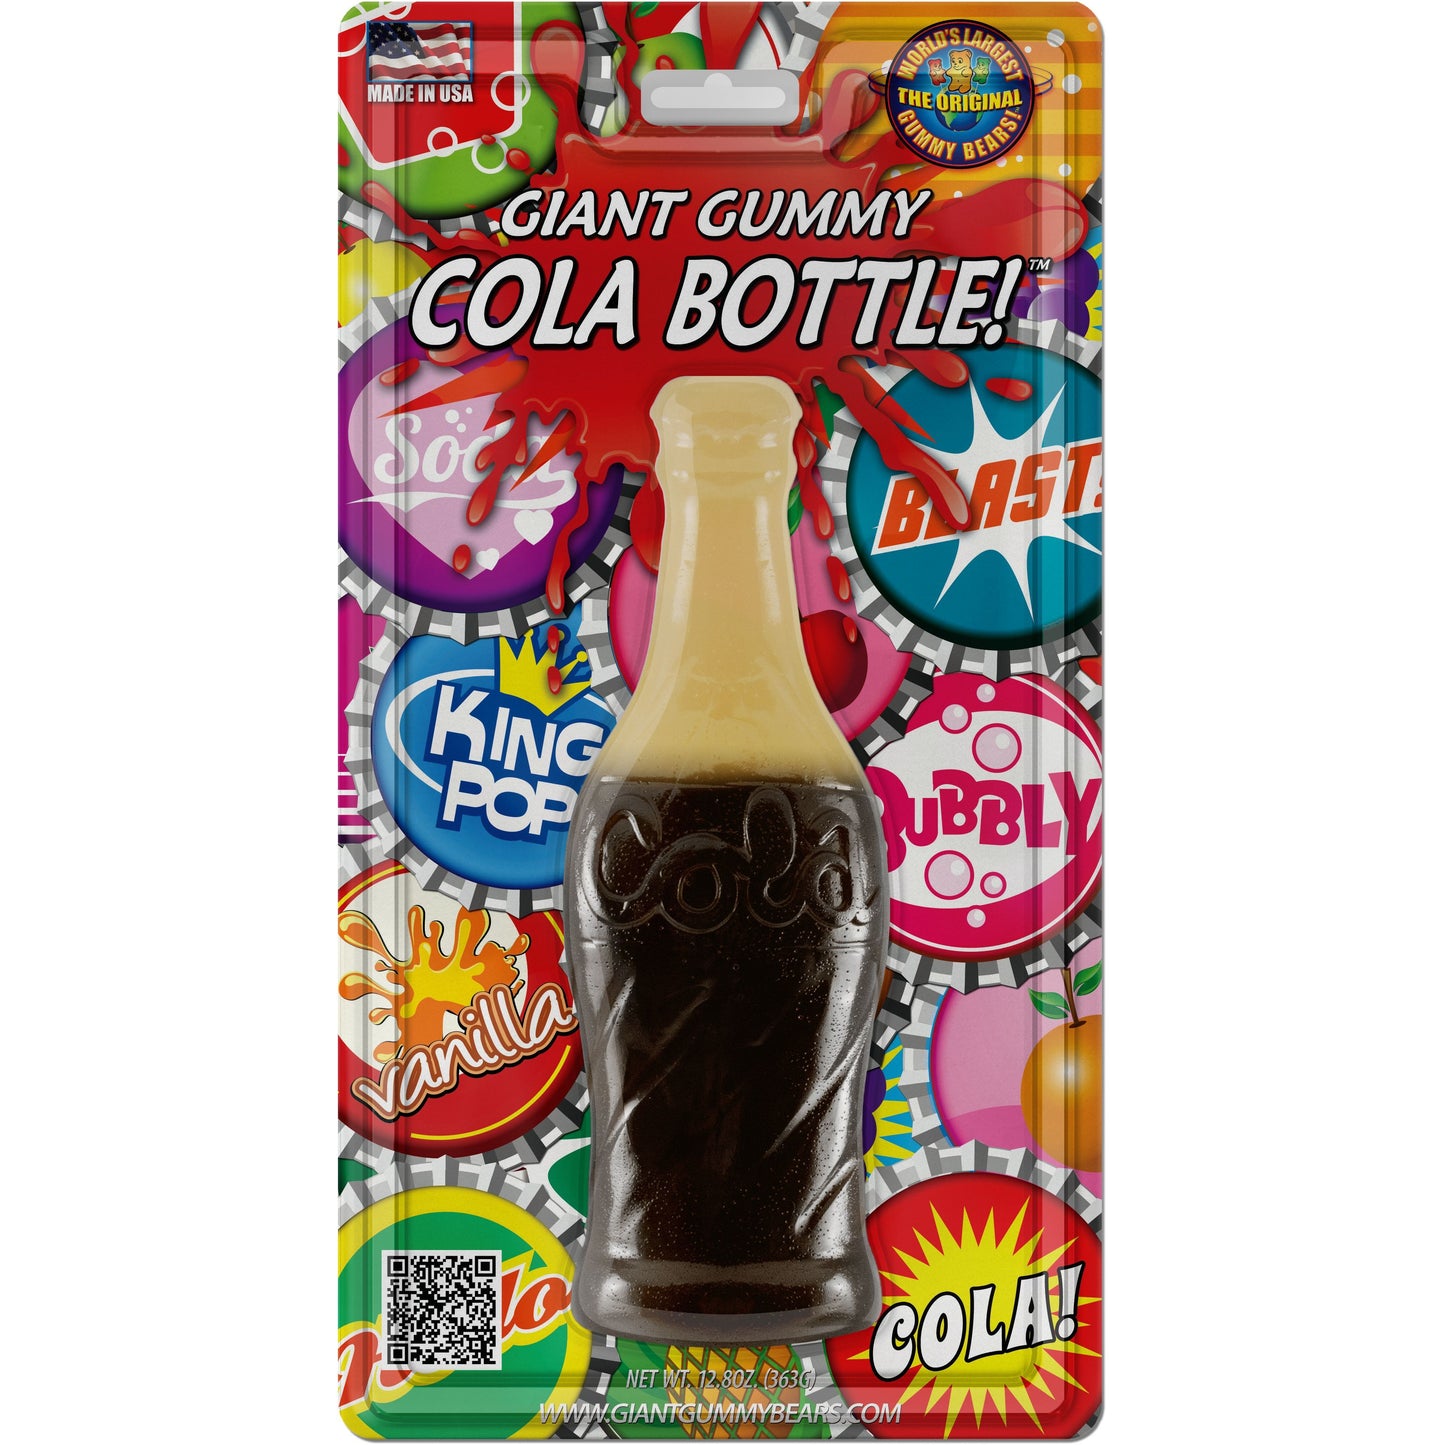 Giant Gummy Cola Bottle Blister - Vanilla Cola 12.8oz (363g) 8ct